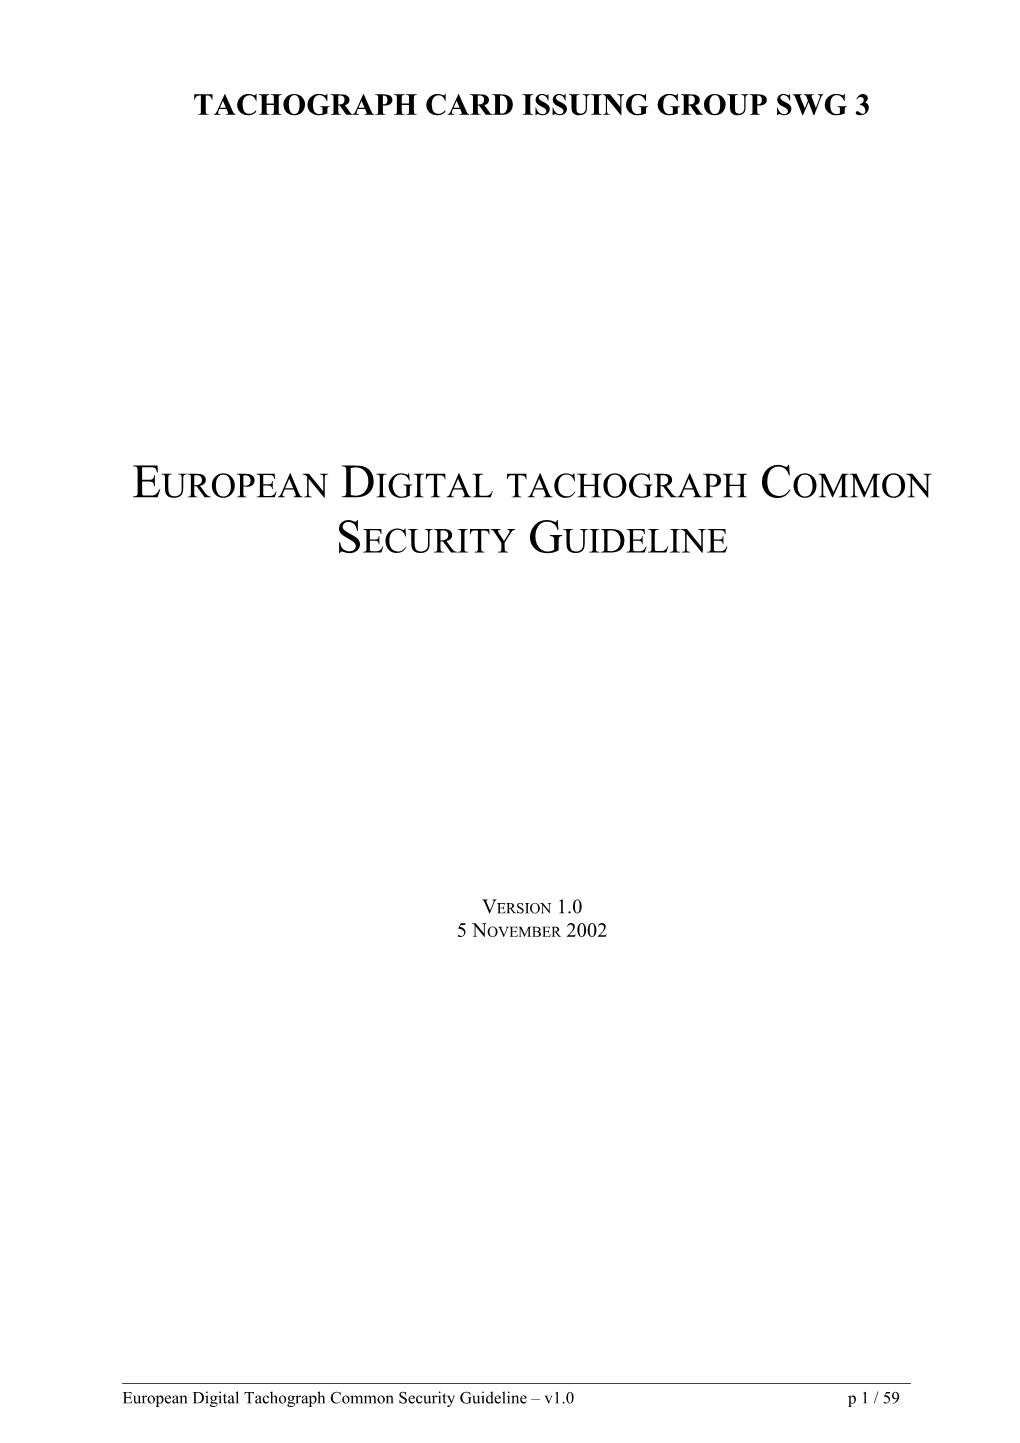 European Digital Tachograph Common Security Guideline